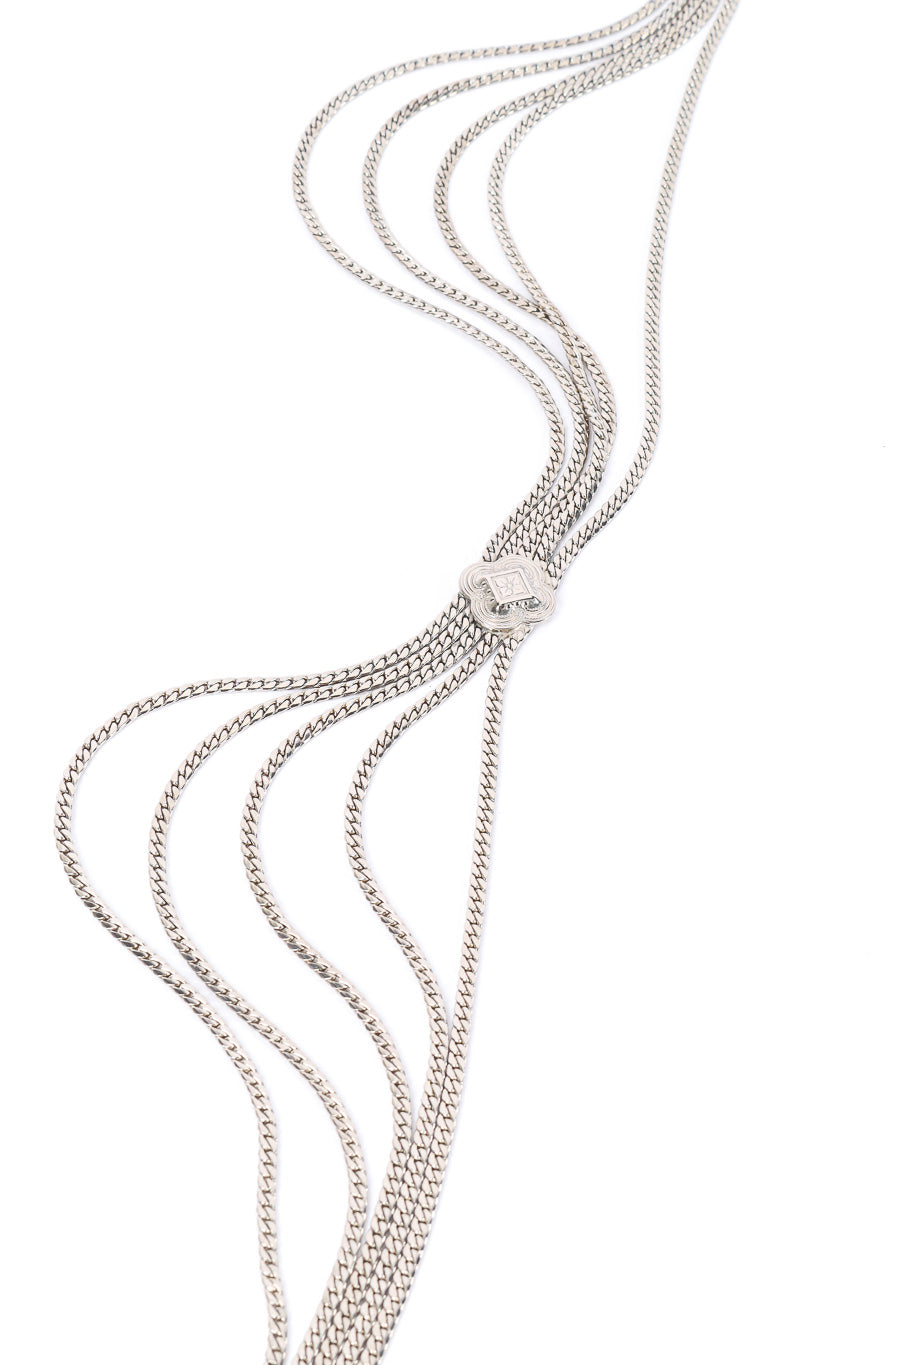 Waist chain belt by Christian Dior flat lay in waves @recessla